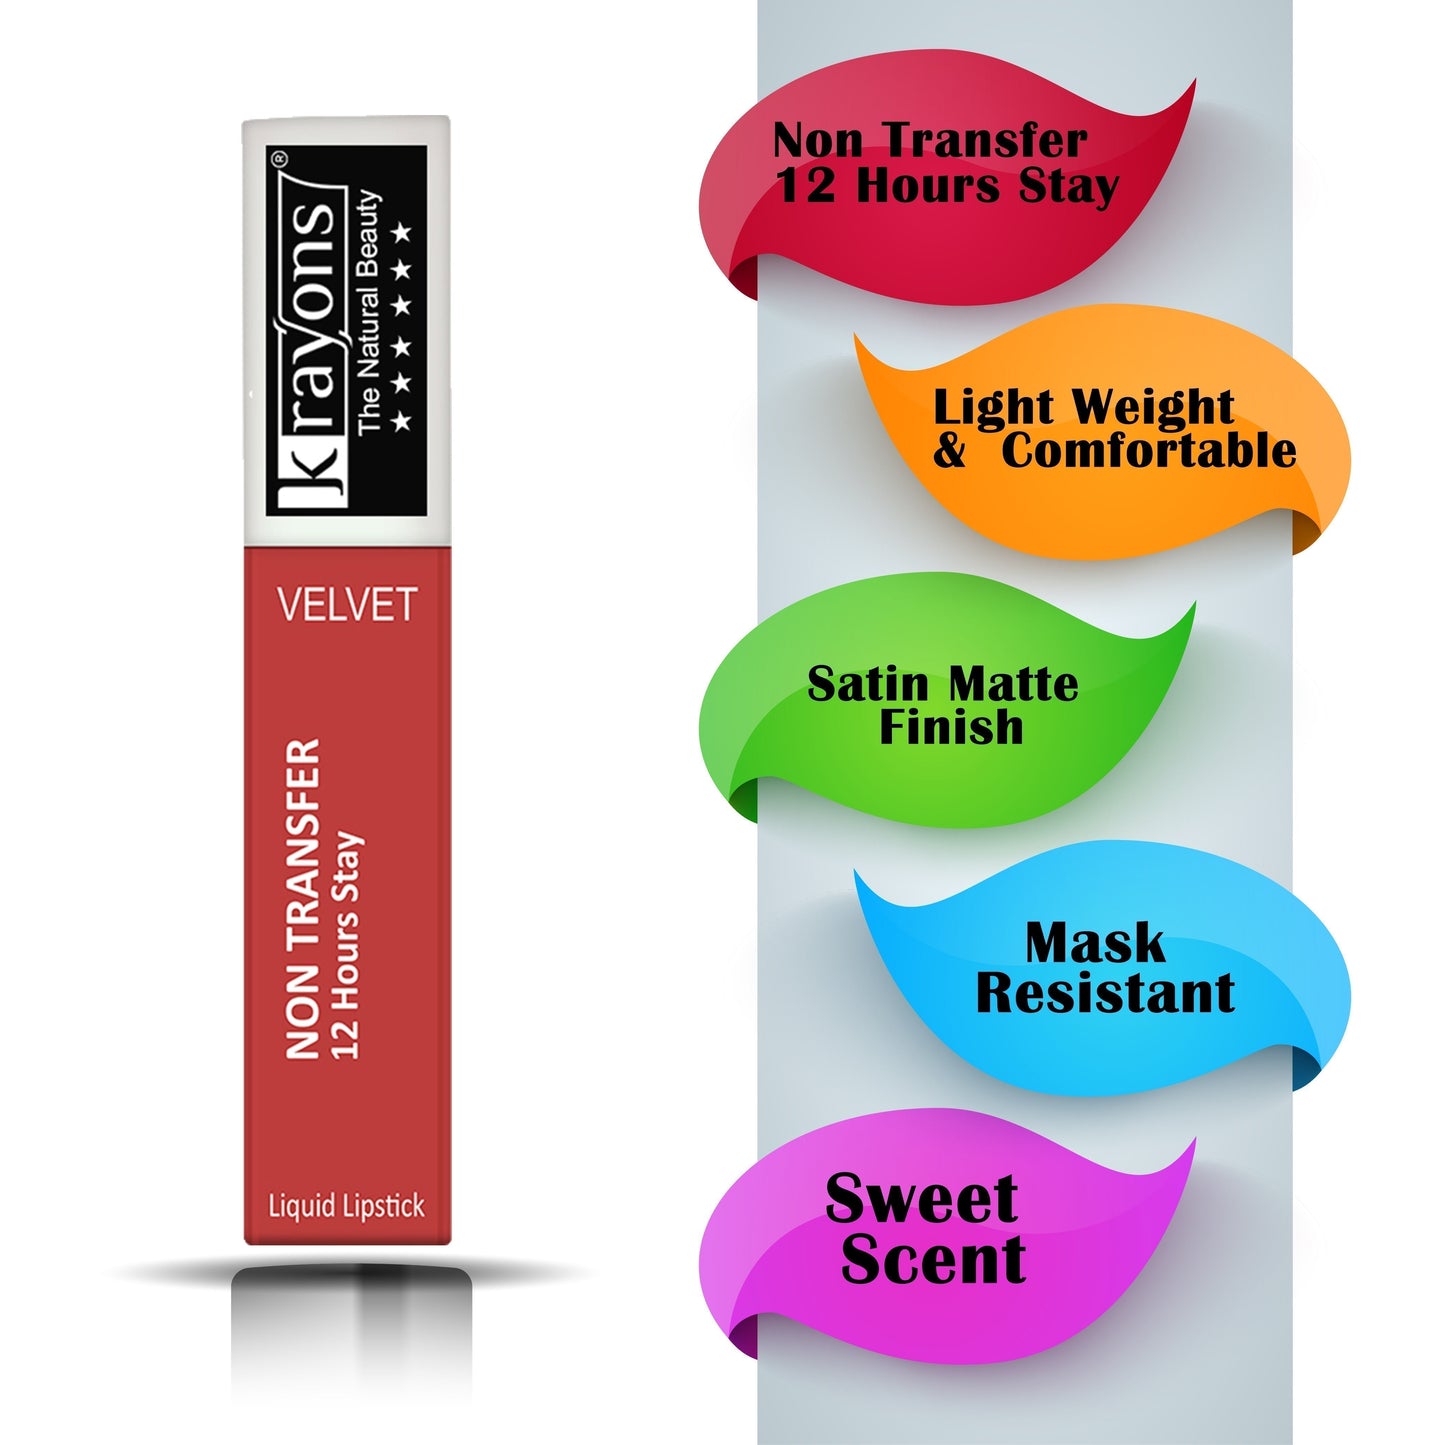 Krayons Power Stay Nontransfer 12hrs Stay Matte Liquid Lipstick, Mask Proof, 4ml Each, Combo, Pack of 2 (Caramel, Burnt Orange)